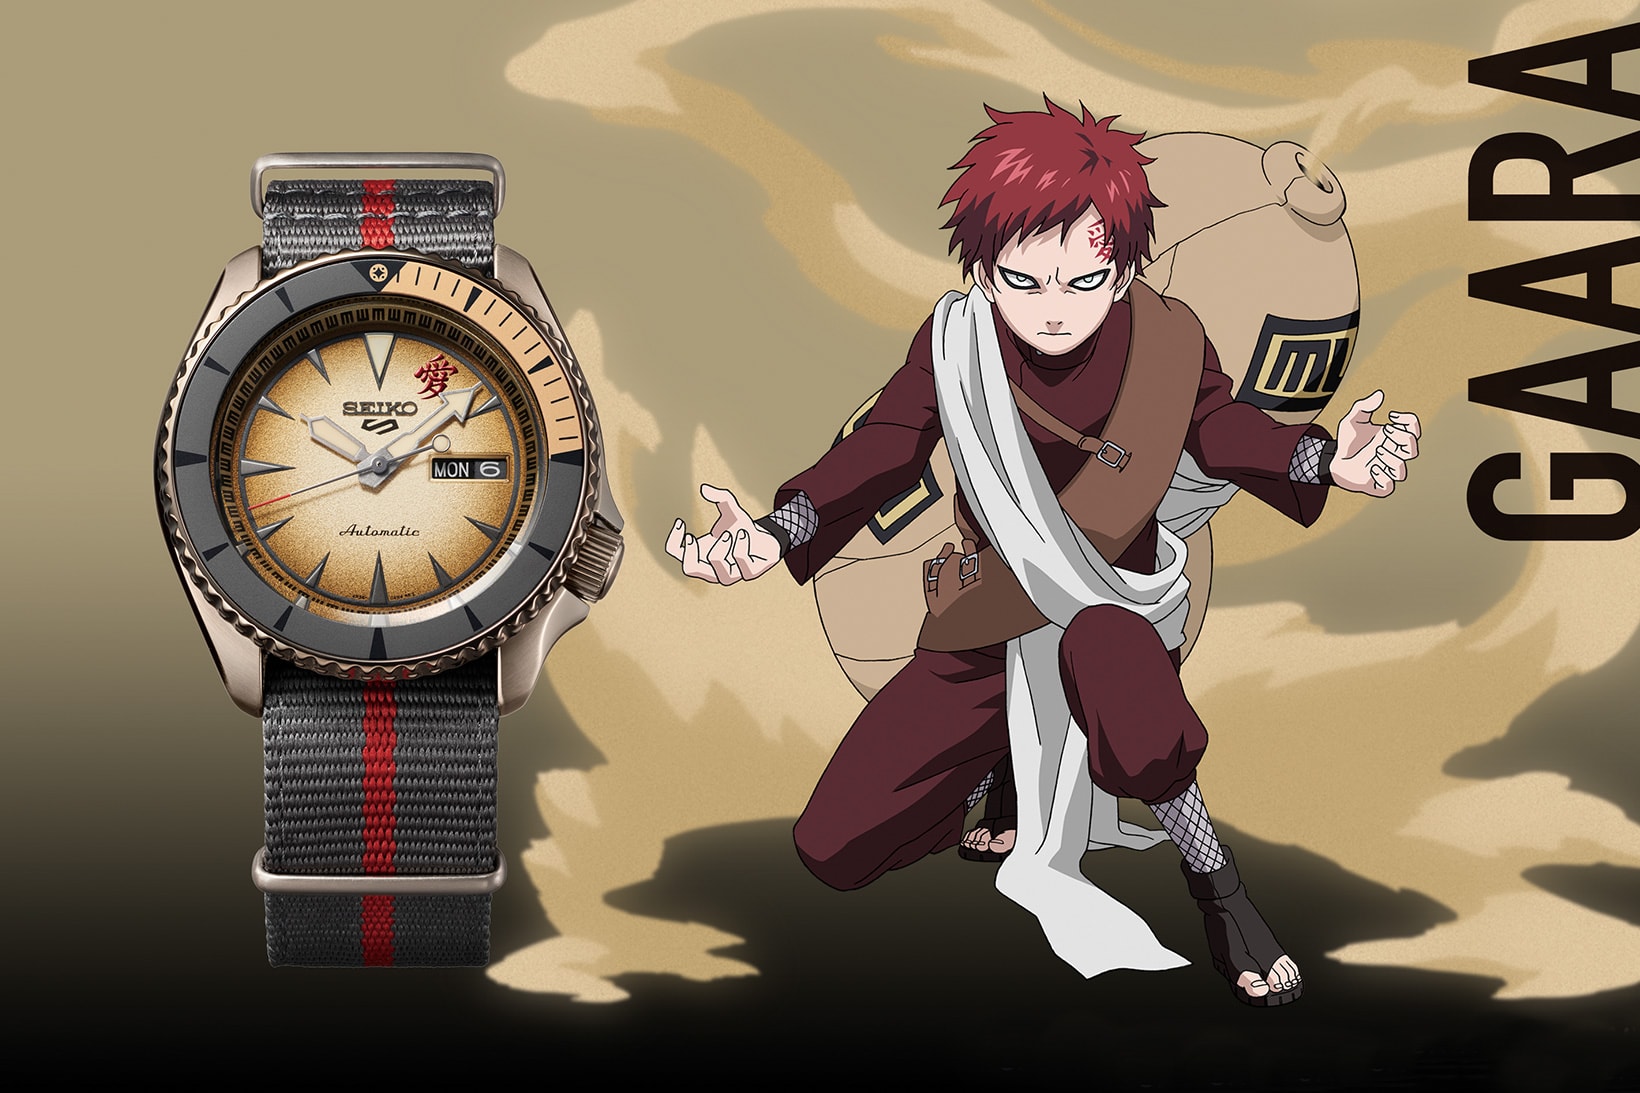 seiko 5 sports naruto themed watches boruto sasuke gaara limited edition anime manga accessories release info 